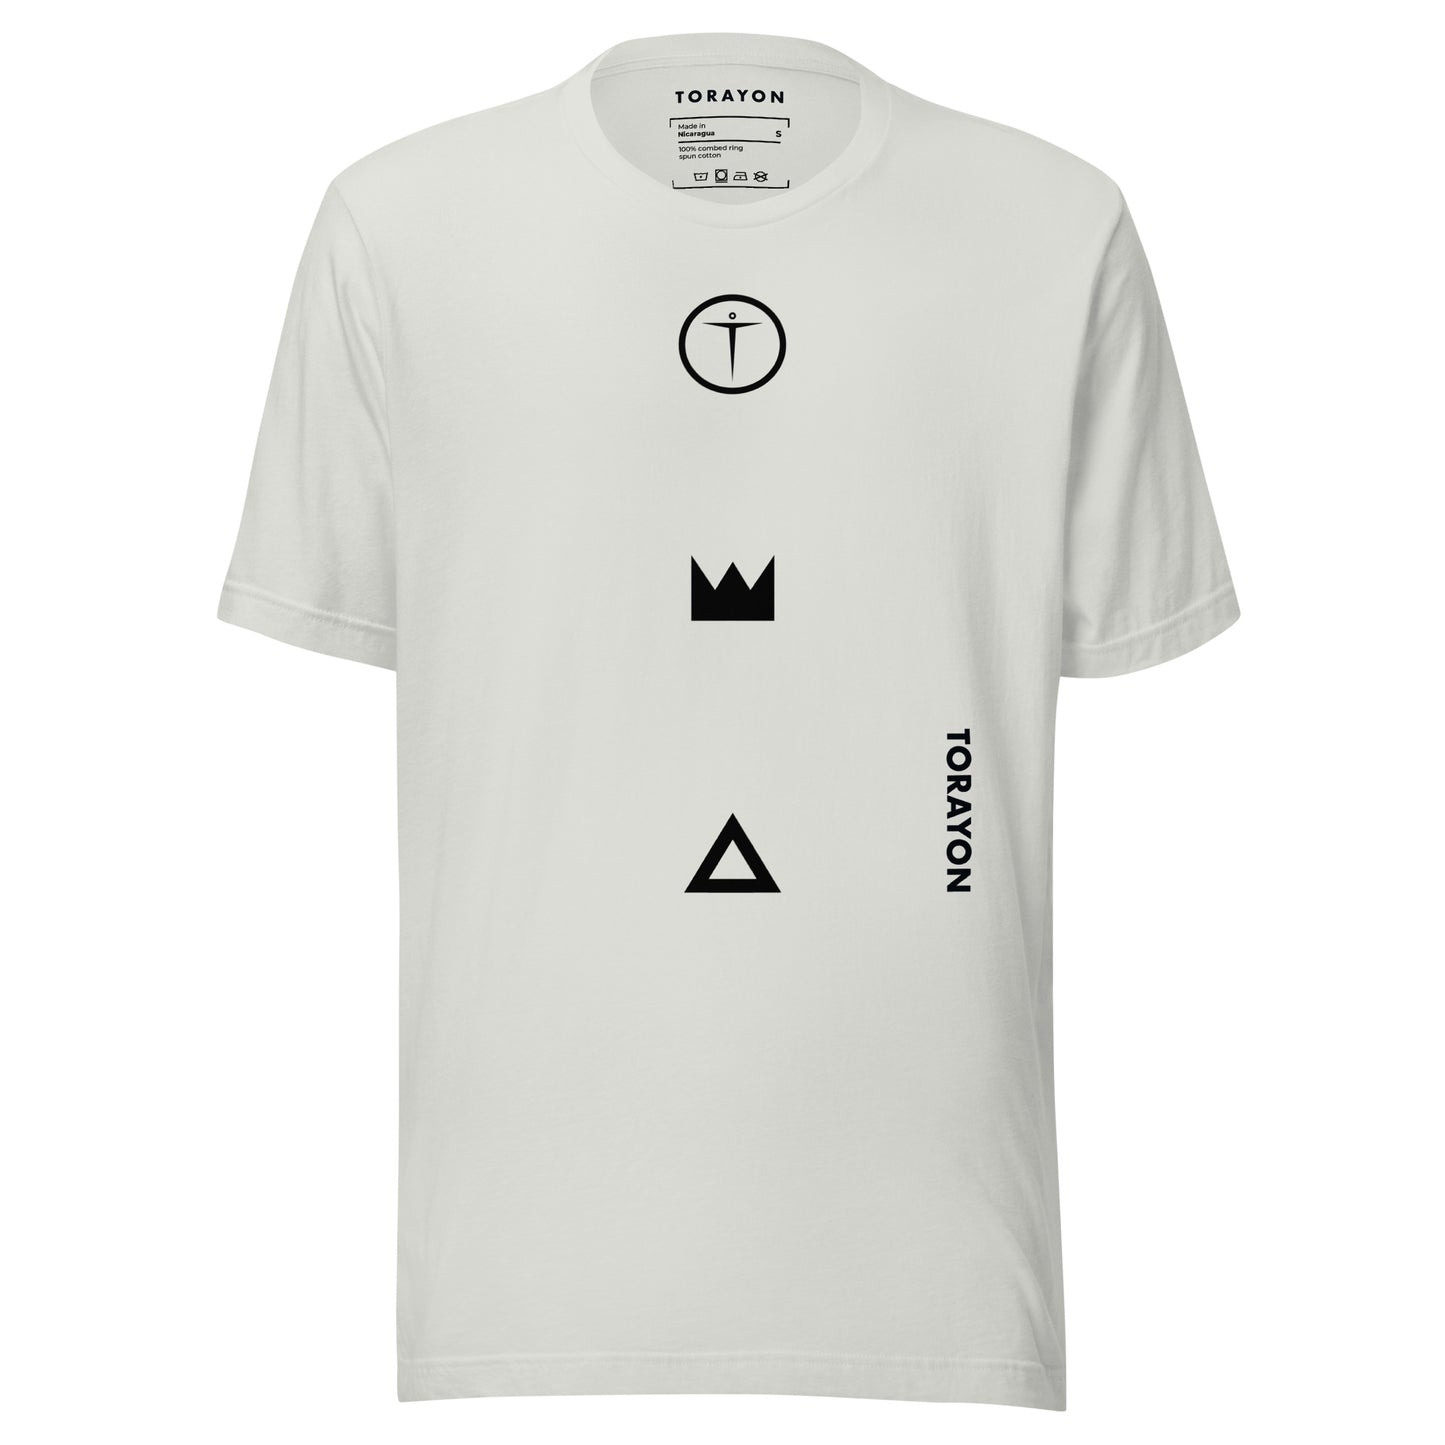 TORAYON TCT (Blk) Unisex t-shirt